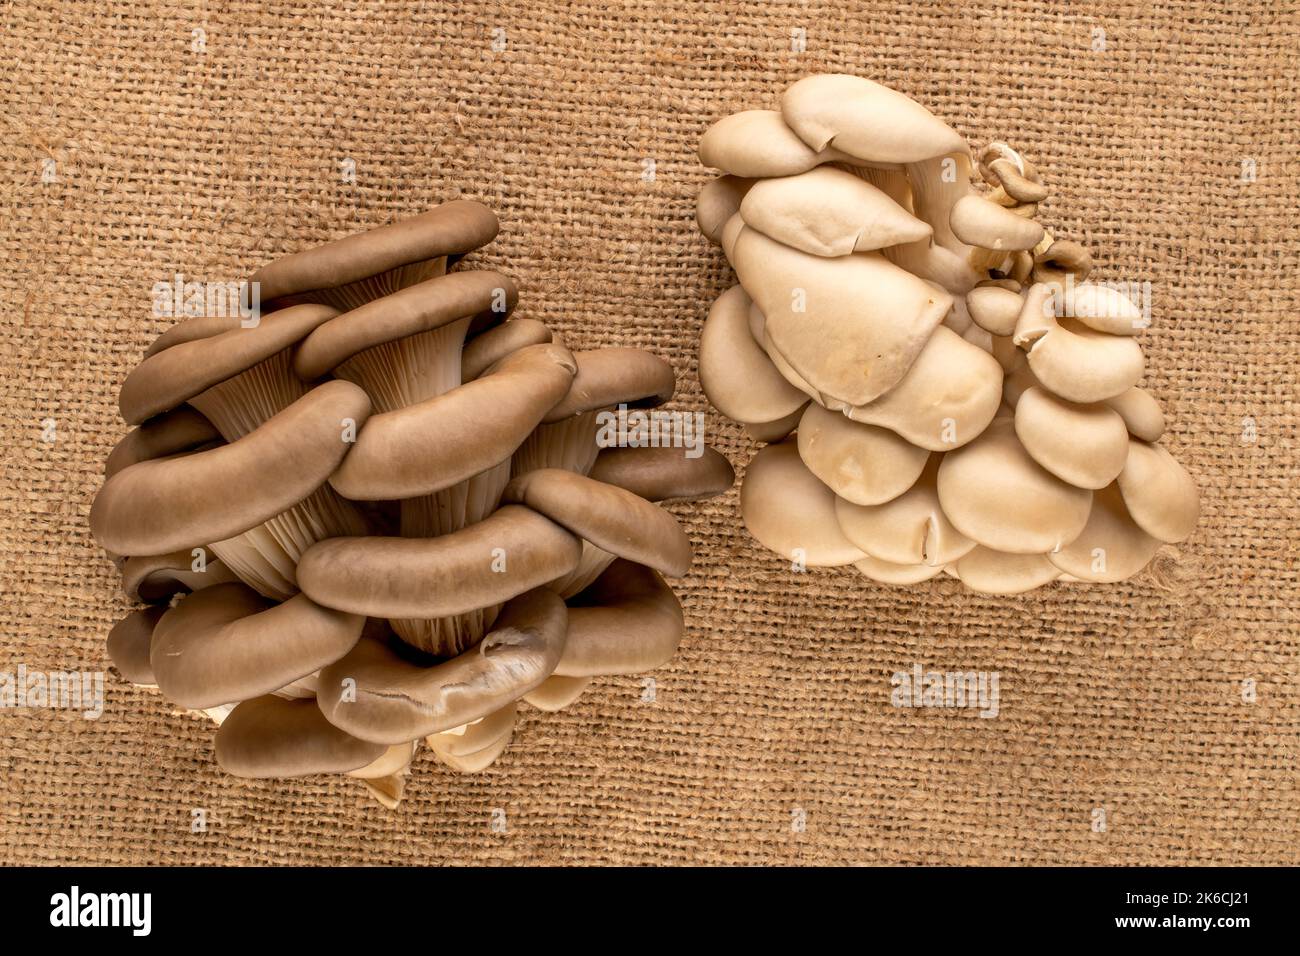 Funghi biologici freschi su tela di iuta, macro, vista dall'alto. Foto Stock